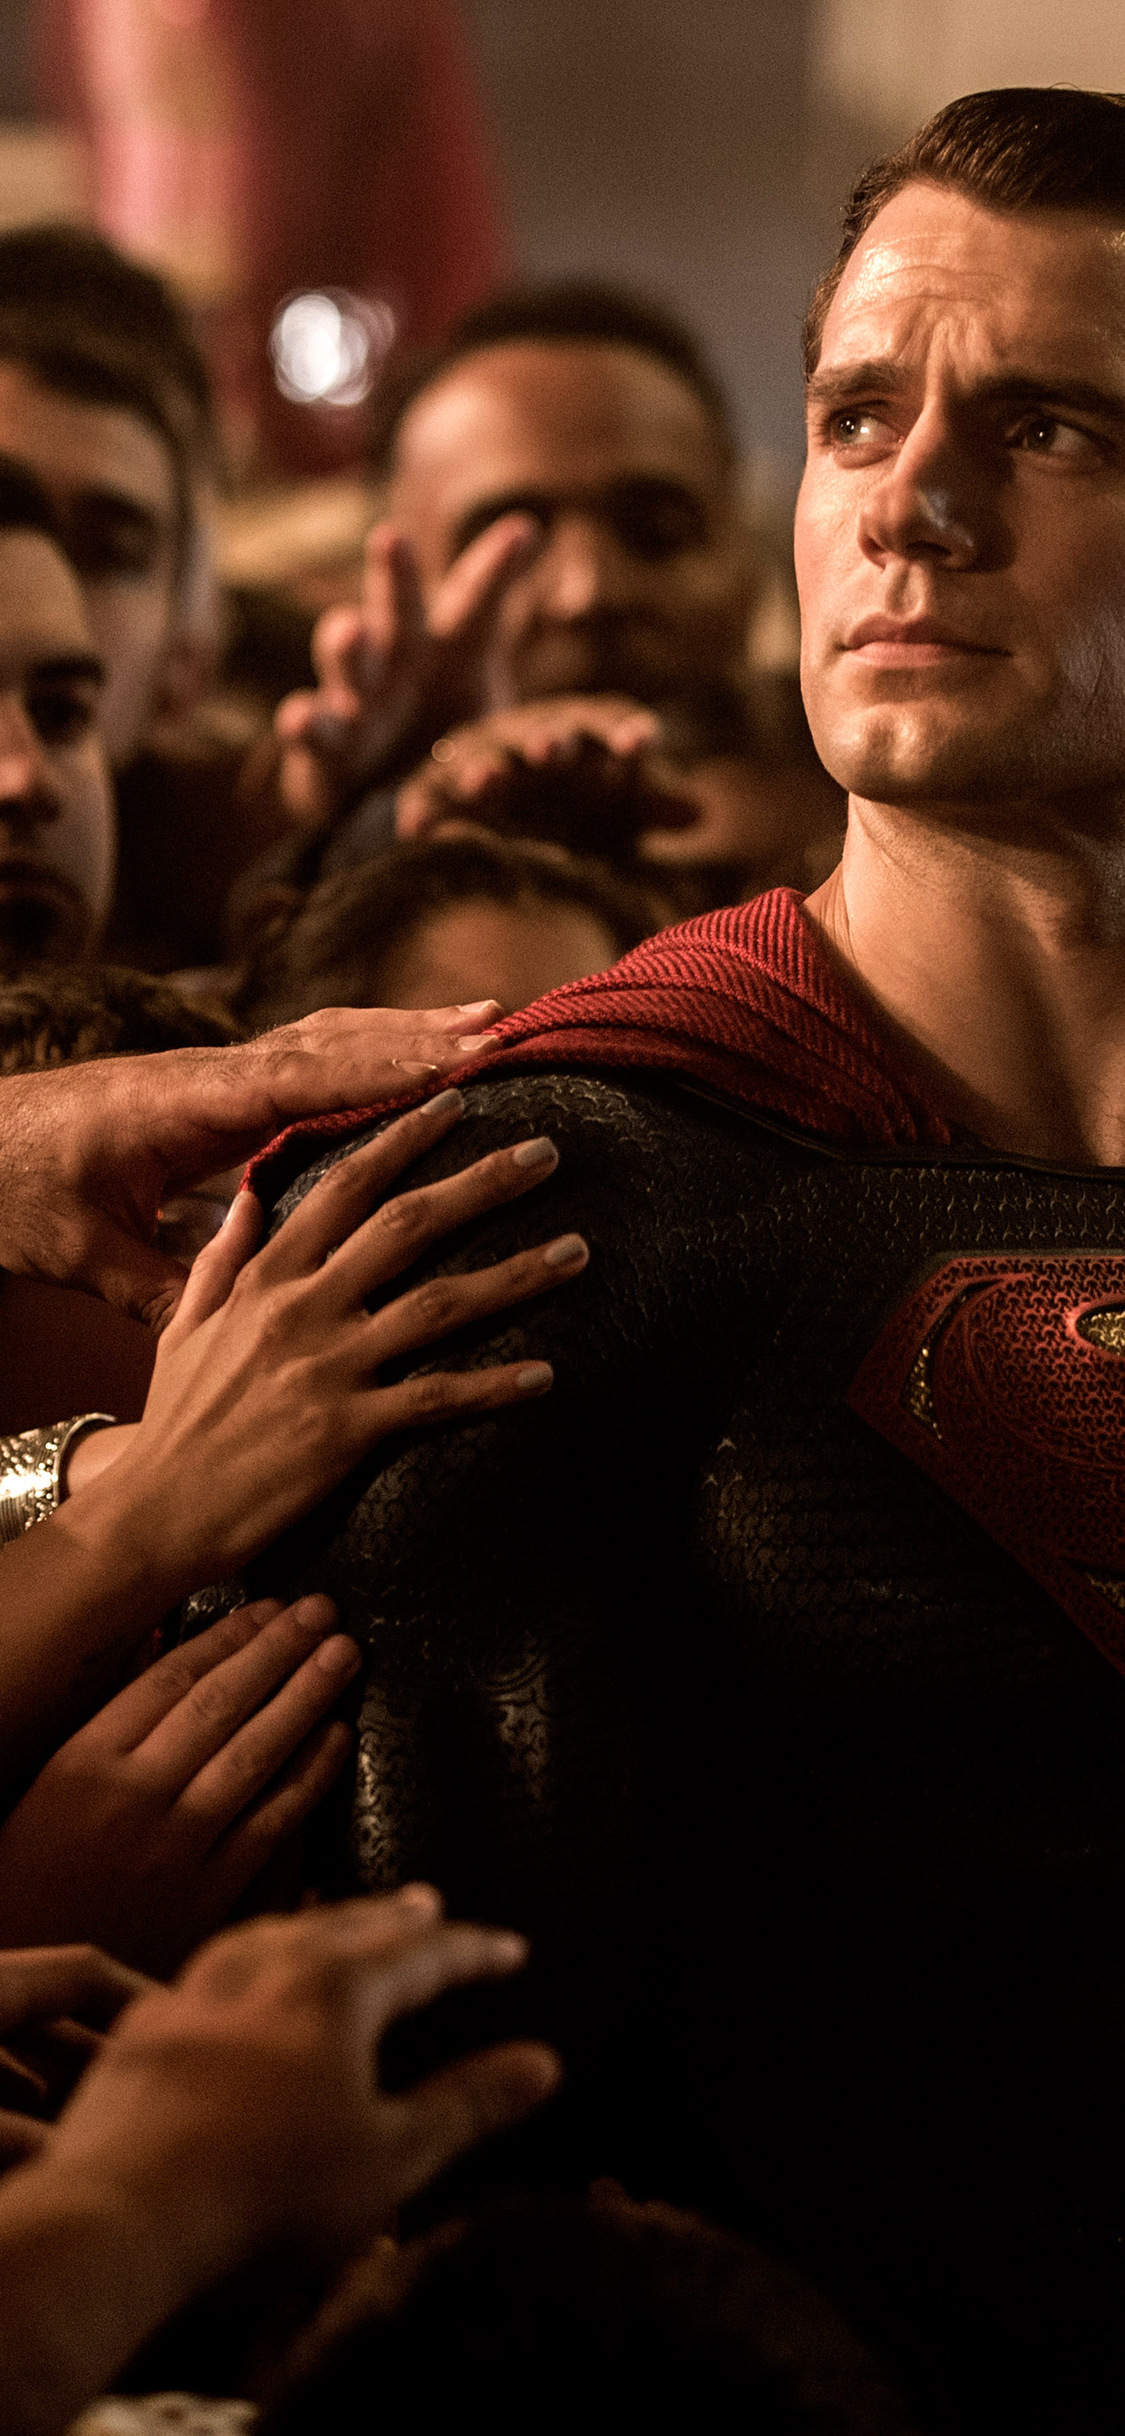 Henry Cavill as Superman Wallpaper 4k Ultra HD ID4874